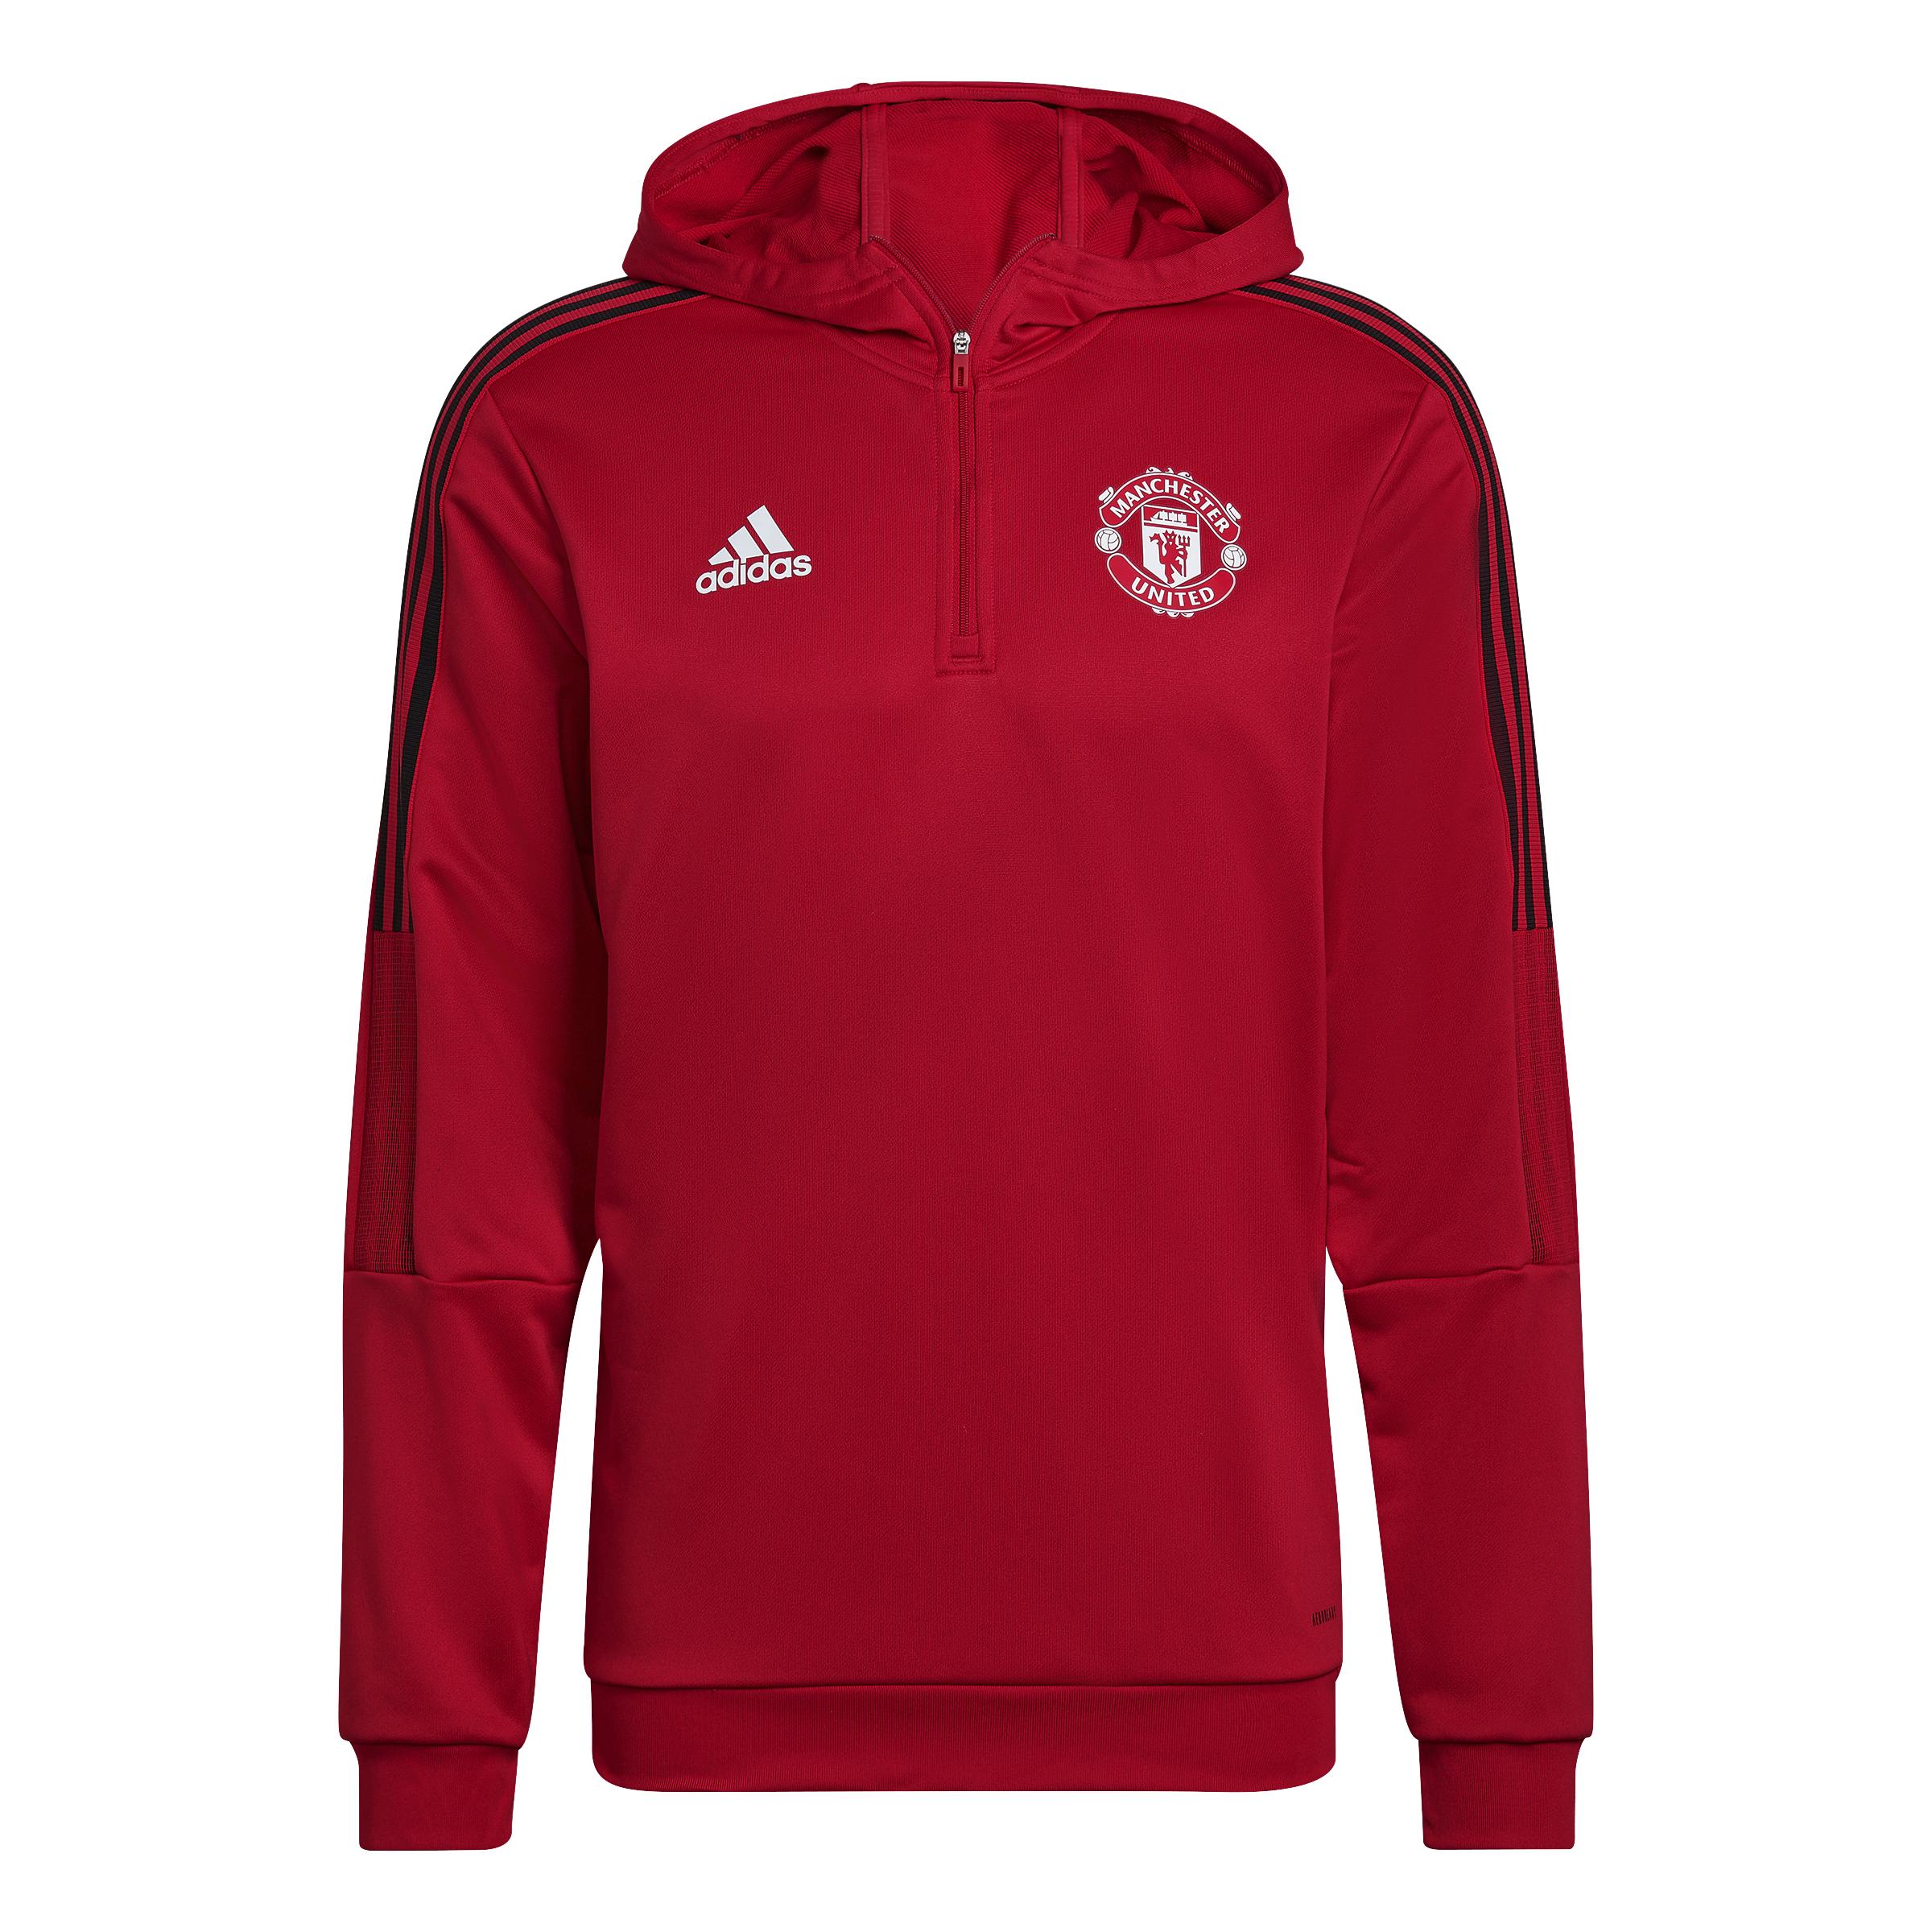 Adidas Sweatshirt Mufc Tk Hood Manchester United